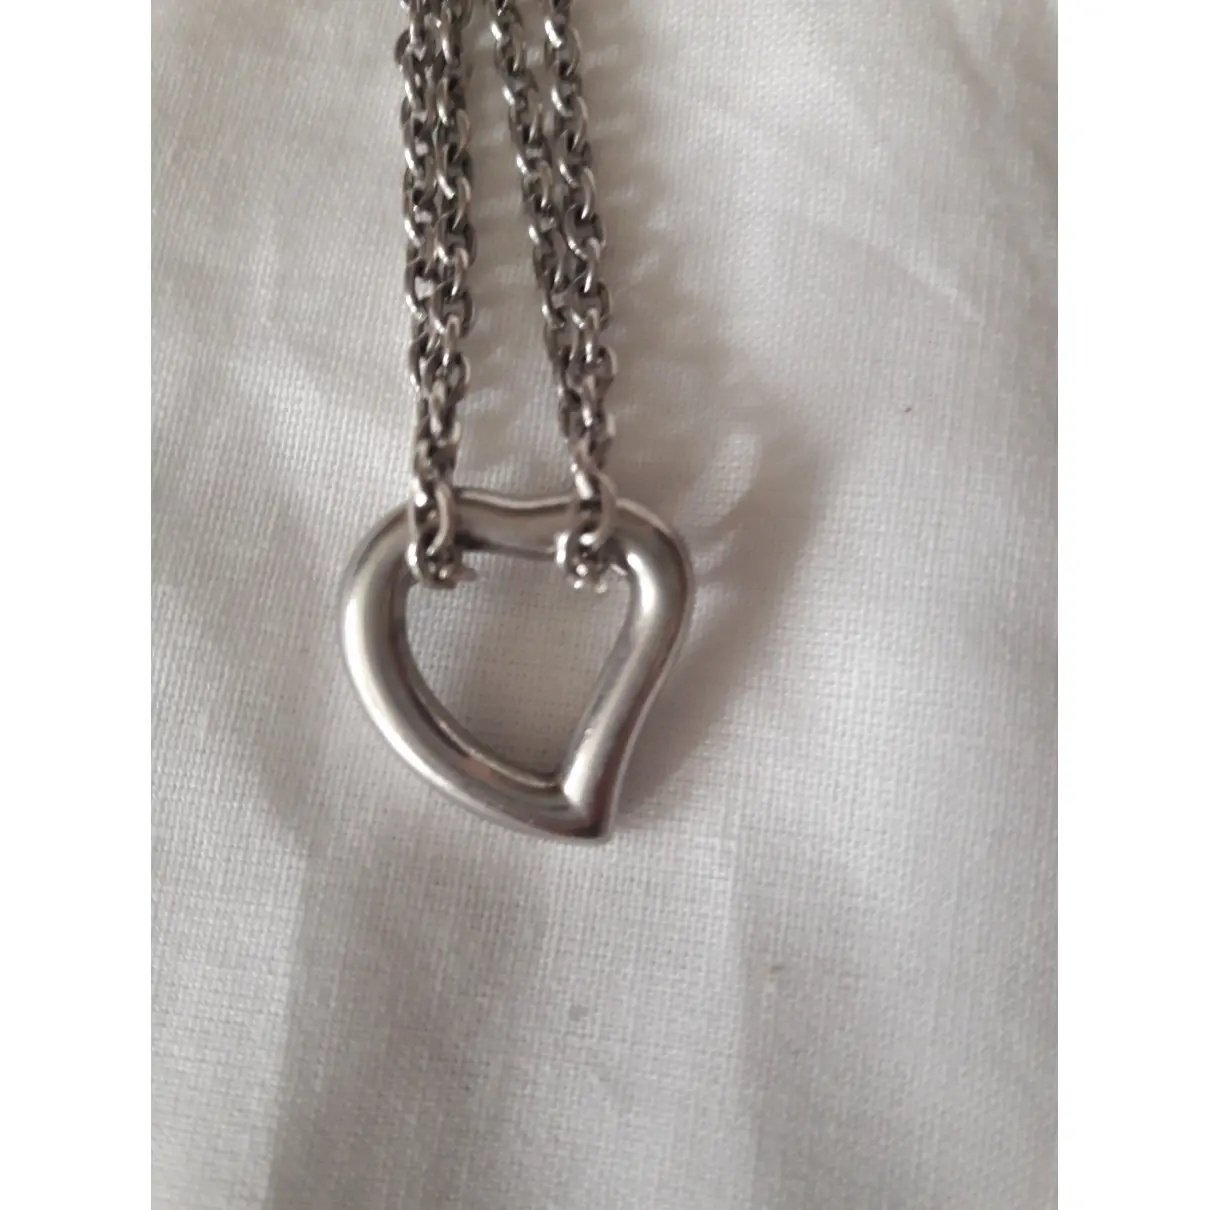 Yves Saint Laurent Silver necklace for sale